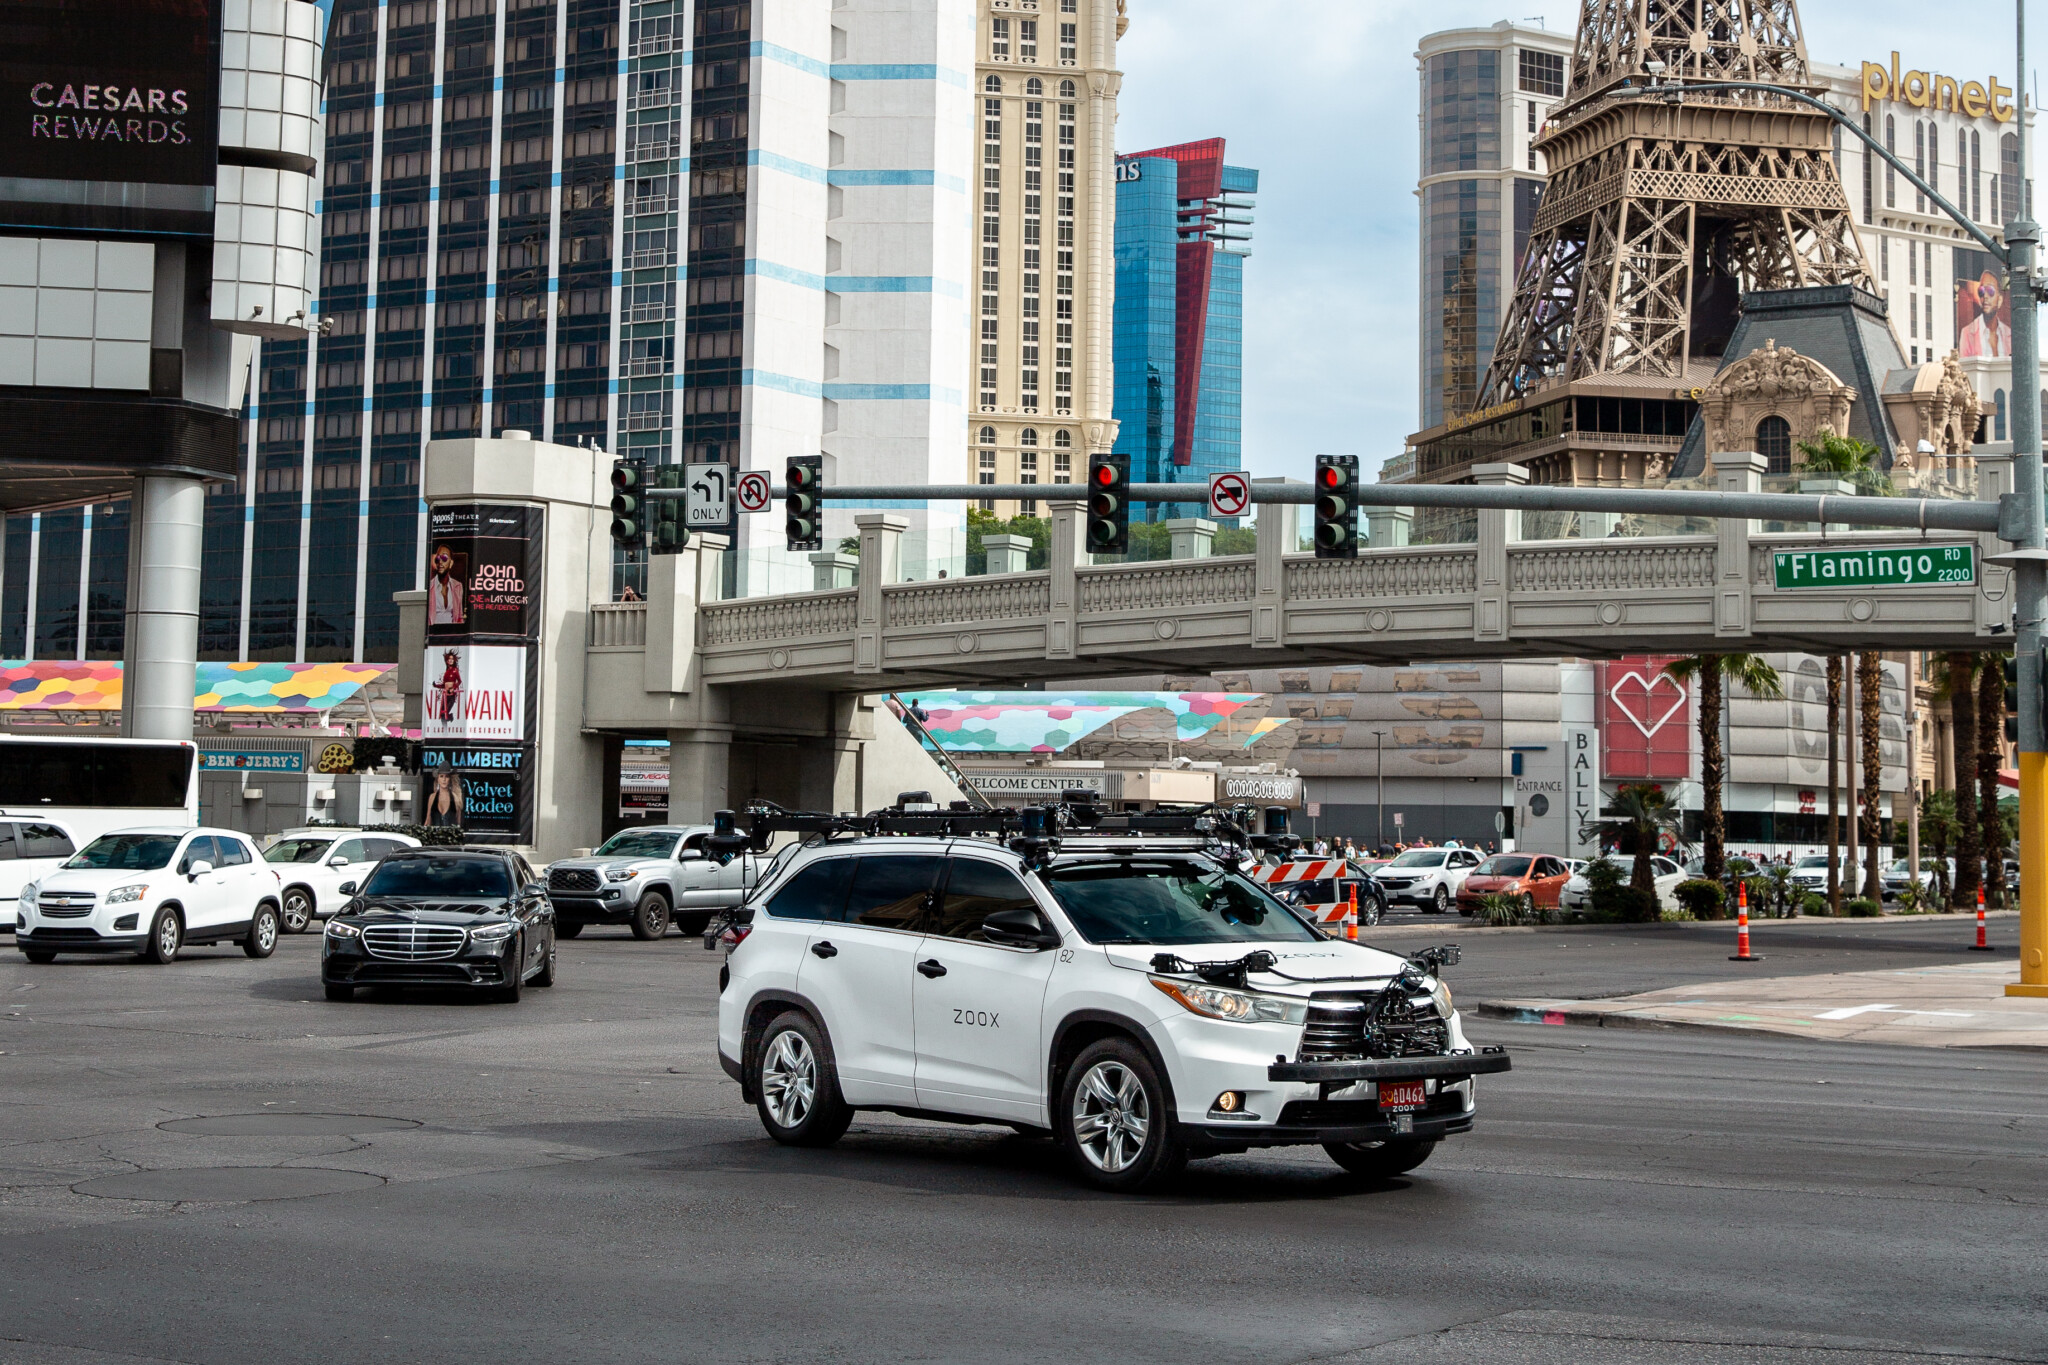 A Zoox test vehicle drives along the Las Vegas Strip